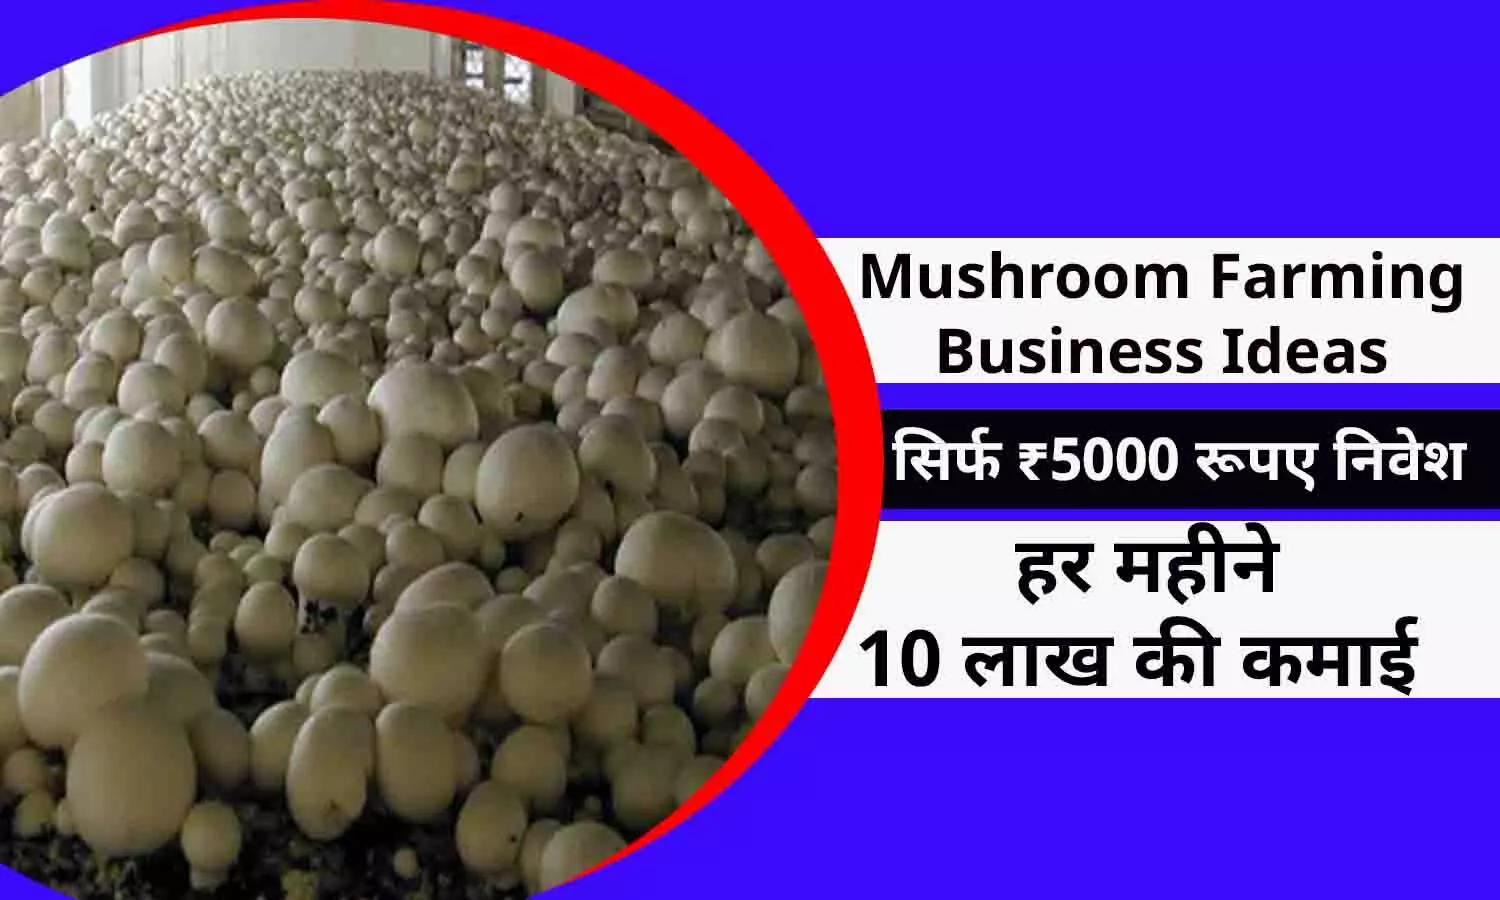 New Business Idea In Hindi 2022: सिर्फ ₹5000 रूपए लगाकर हर महीने करे 10 लाख की कमाई